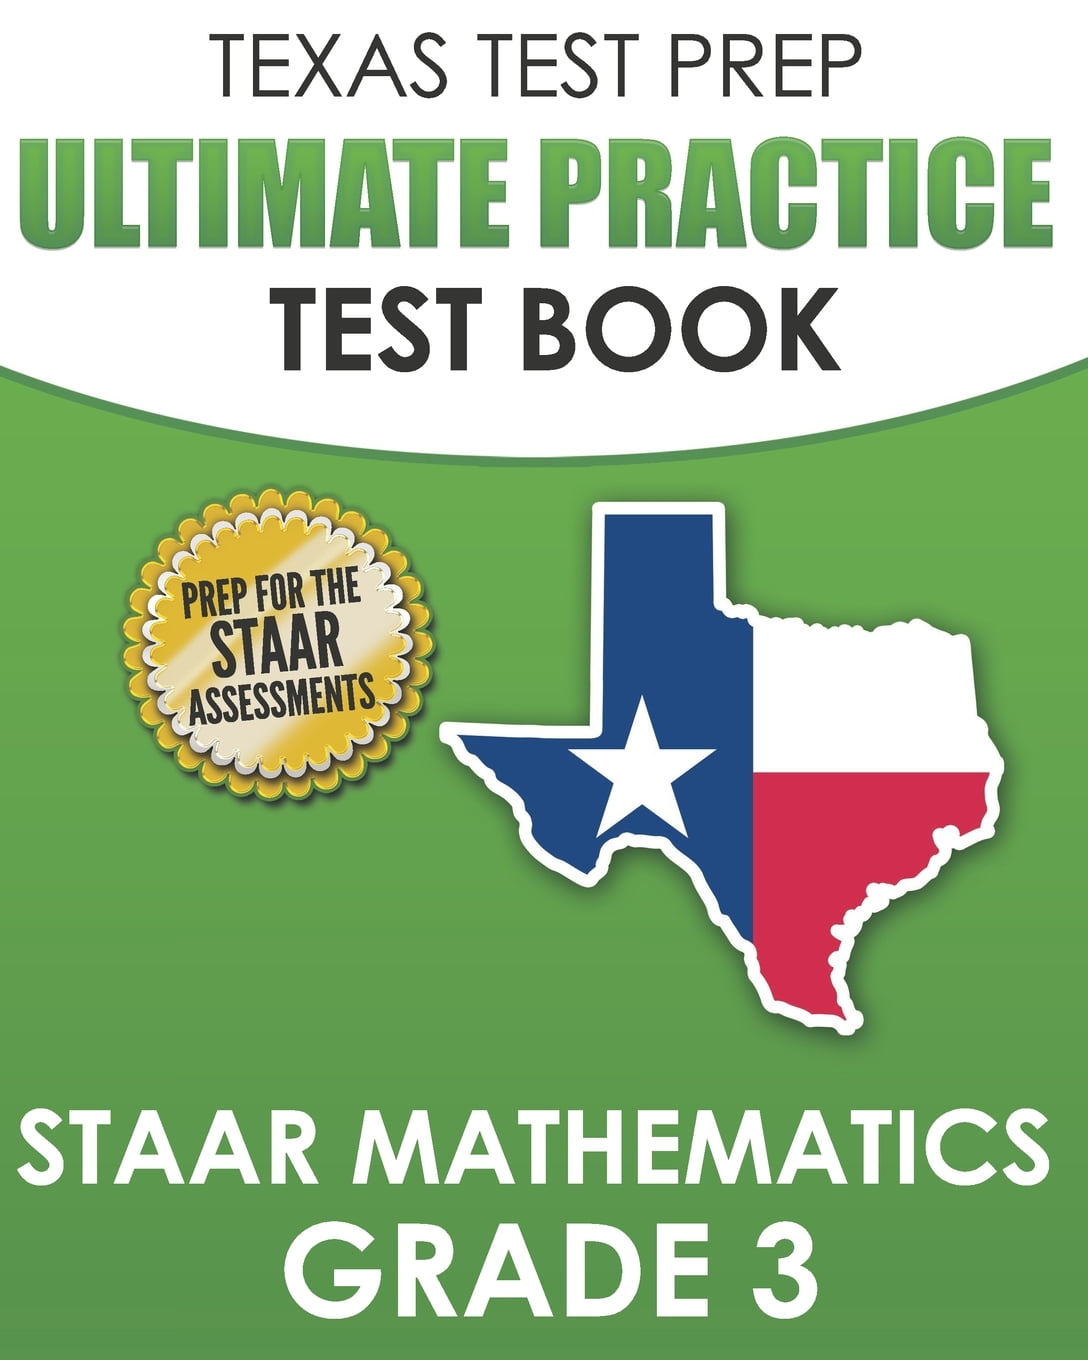 texas-test-prep-ultimate-practice-test-book-staar-mathematics-grade-3-includes-8-staar-math